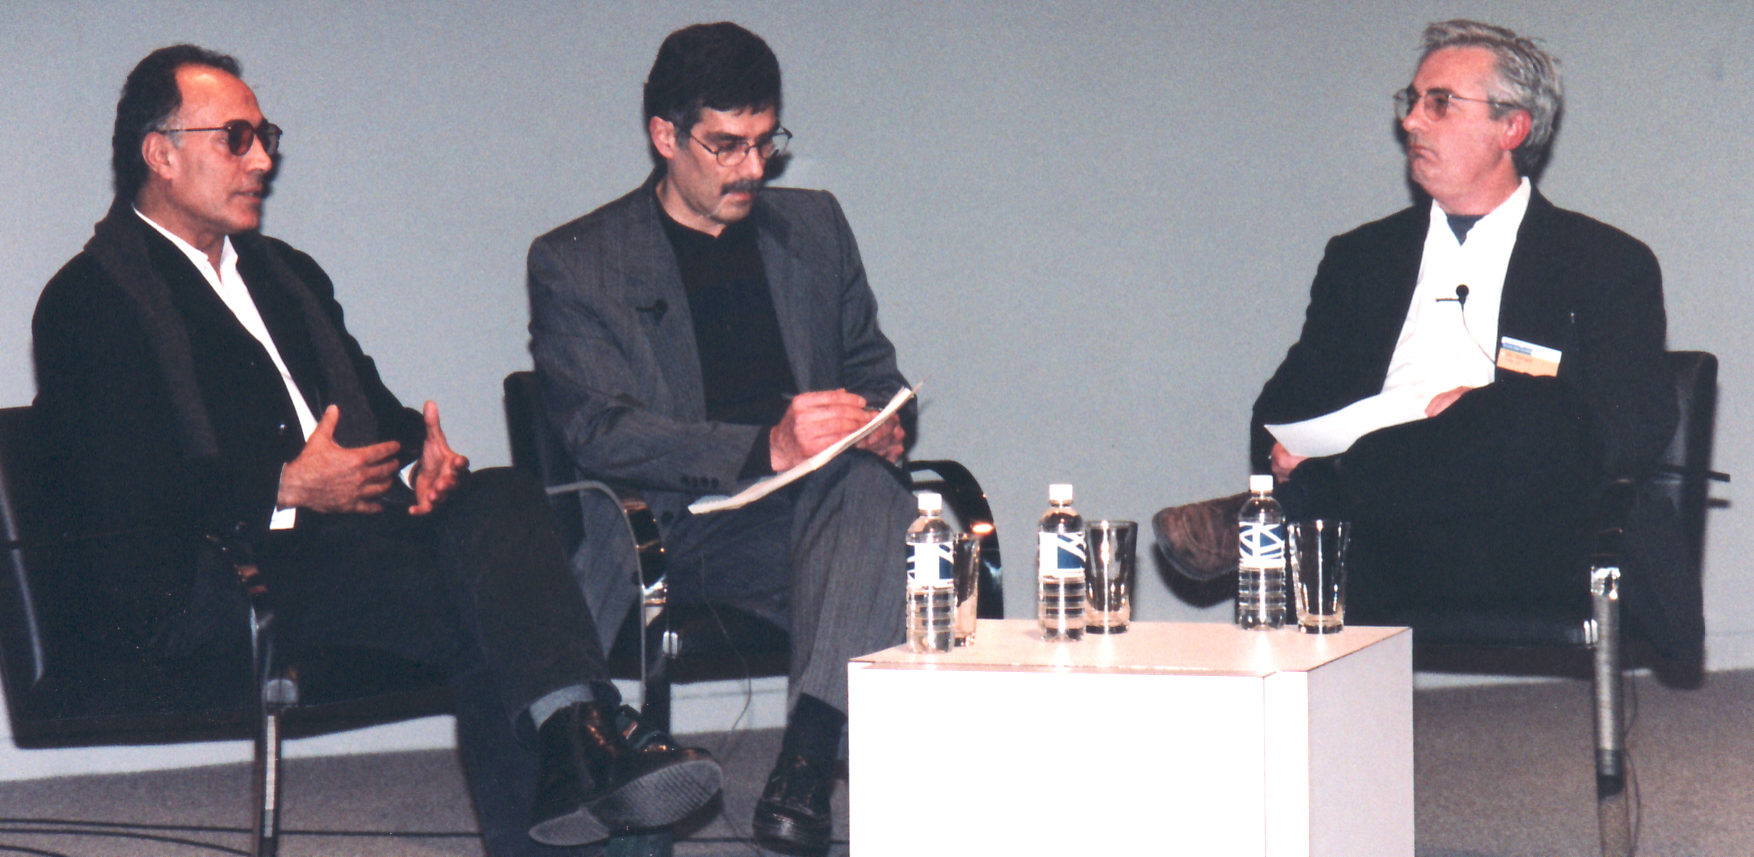 Iranian filmmaker Abbas Kiarostami talking with Wexner Center curator at large Bill Horrigan in 1998